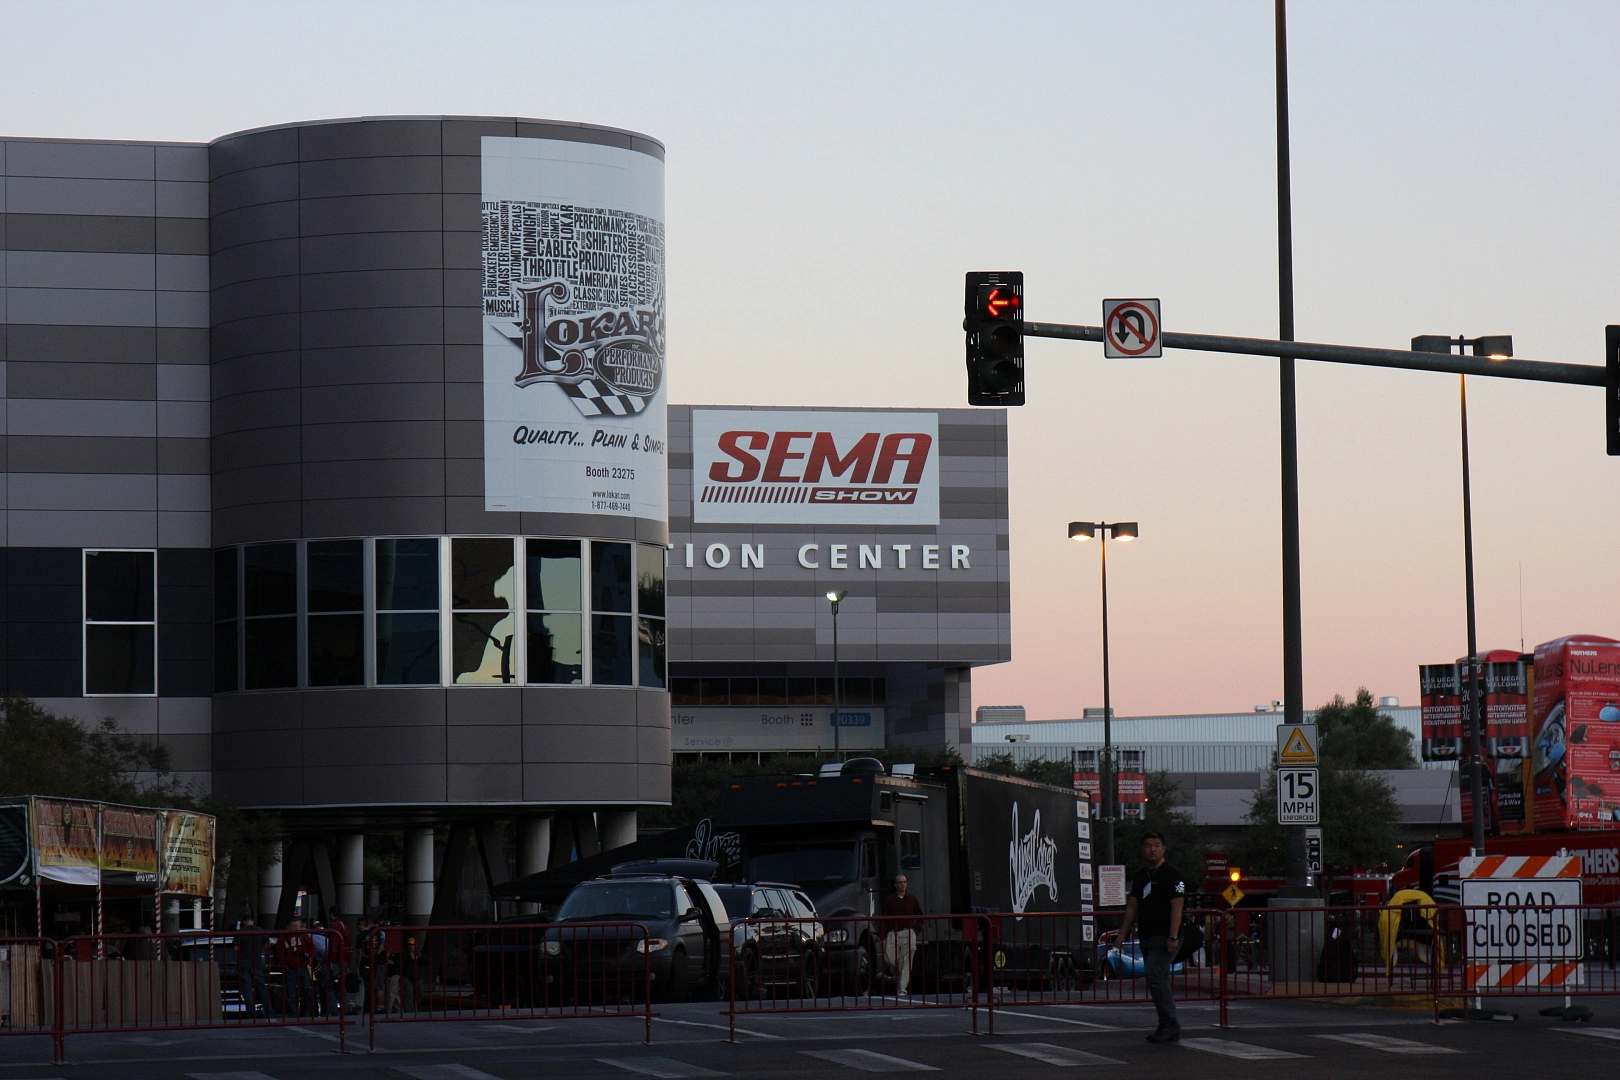 Sema show logo on the building